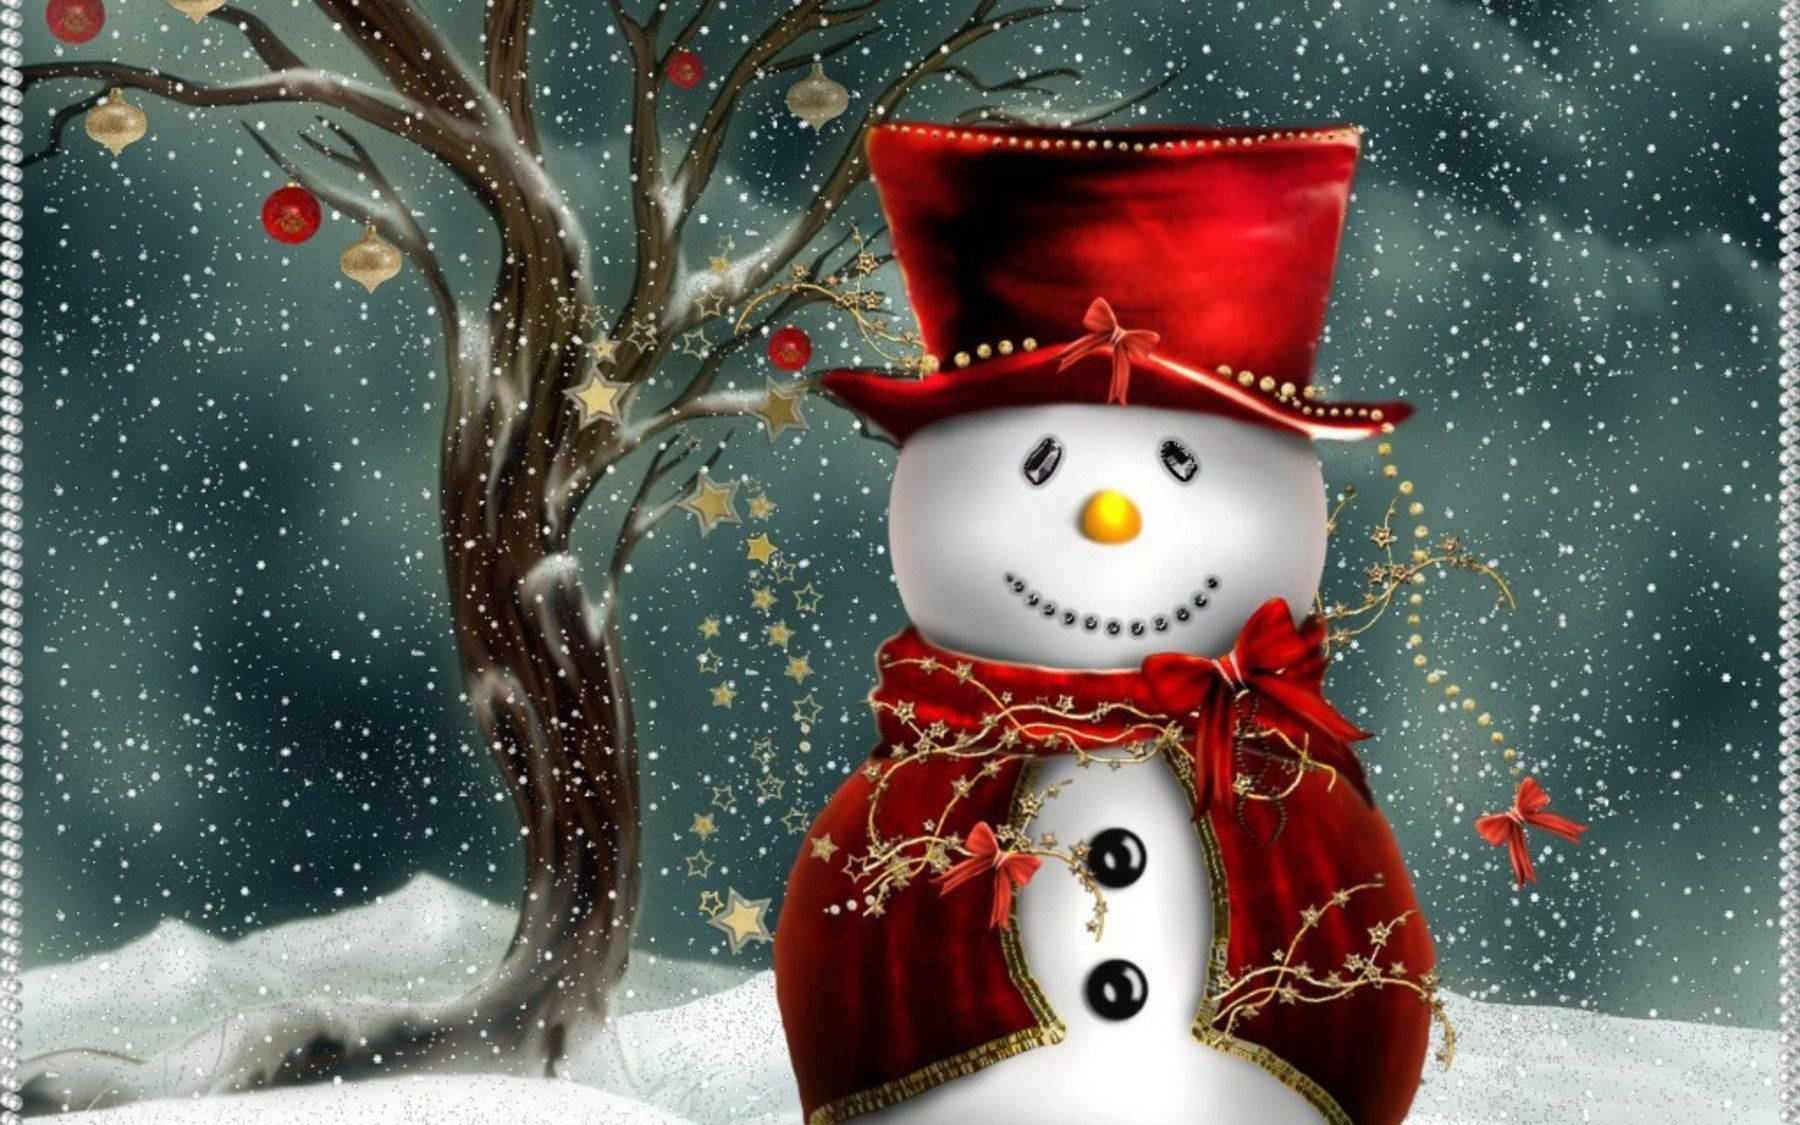 Frosty the snowman enjoying the winter joy Wallpaper